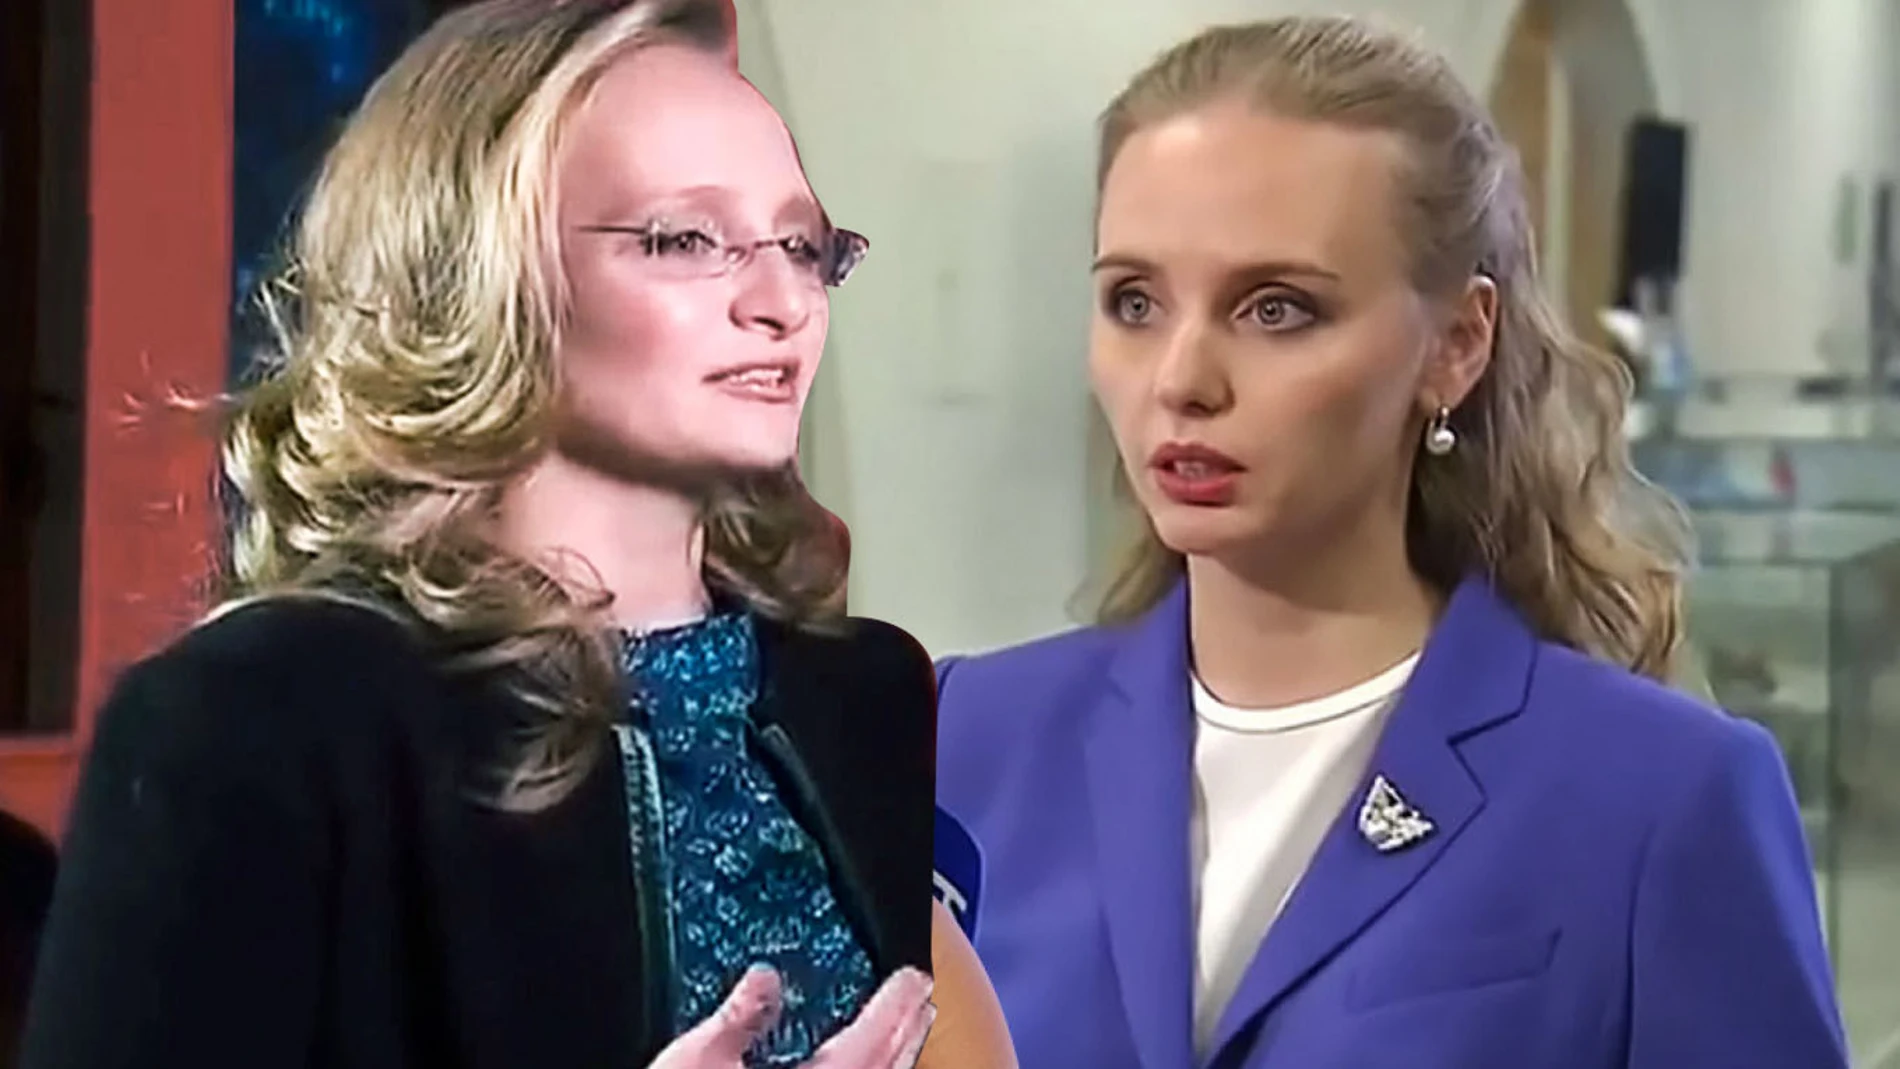 Las hijas de Vladimir Putin, Katerina Tikhonova y Maria Vorontsova, que van a ser sancionadas por la UE